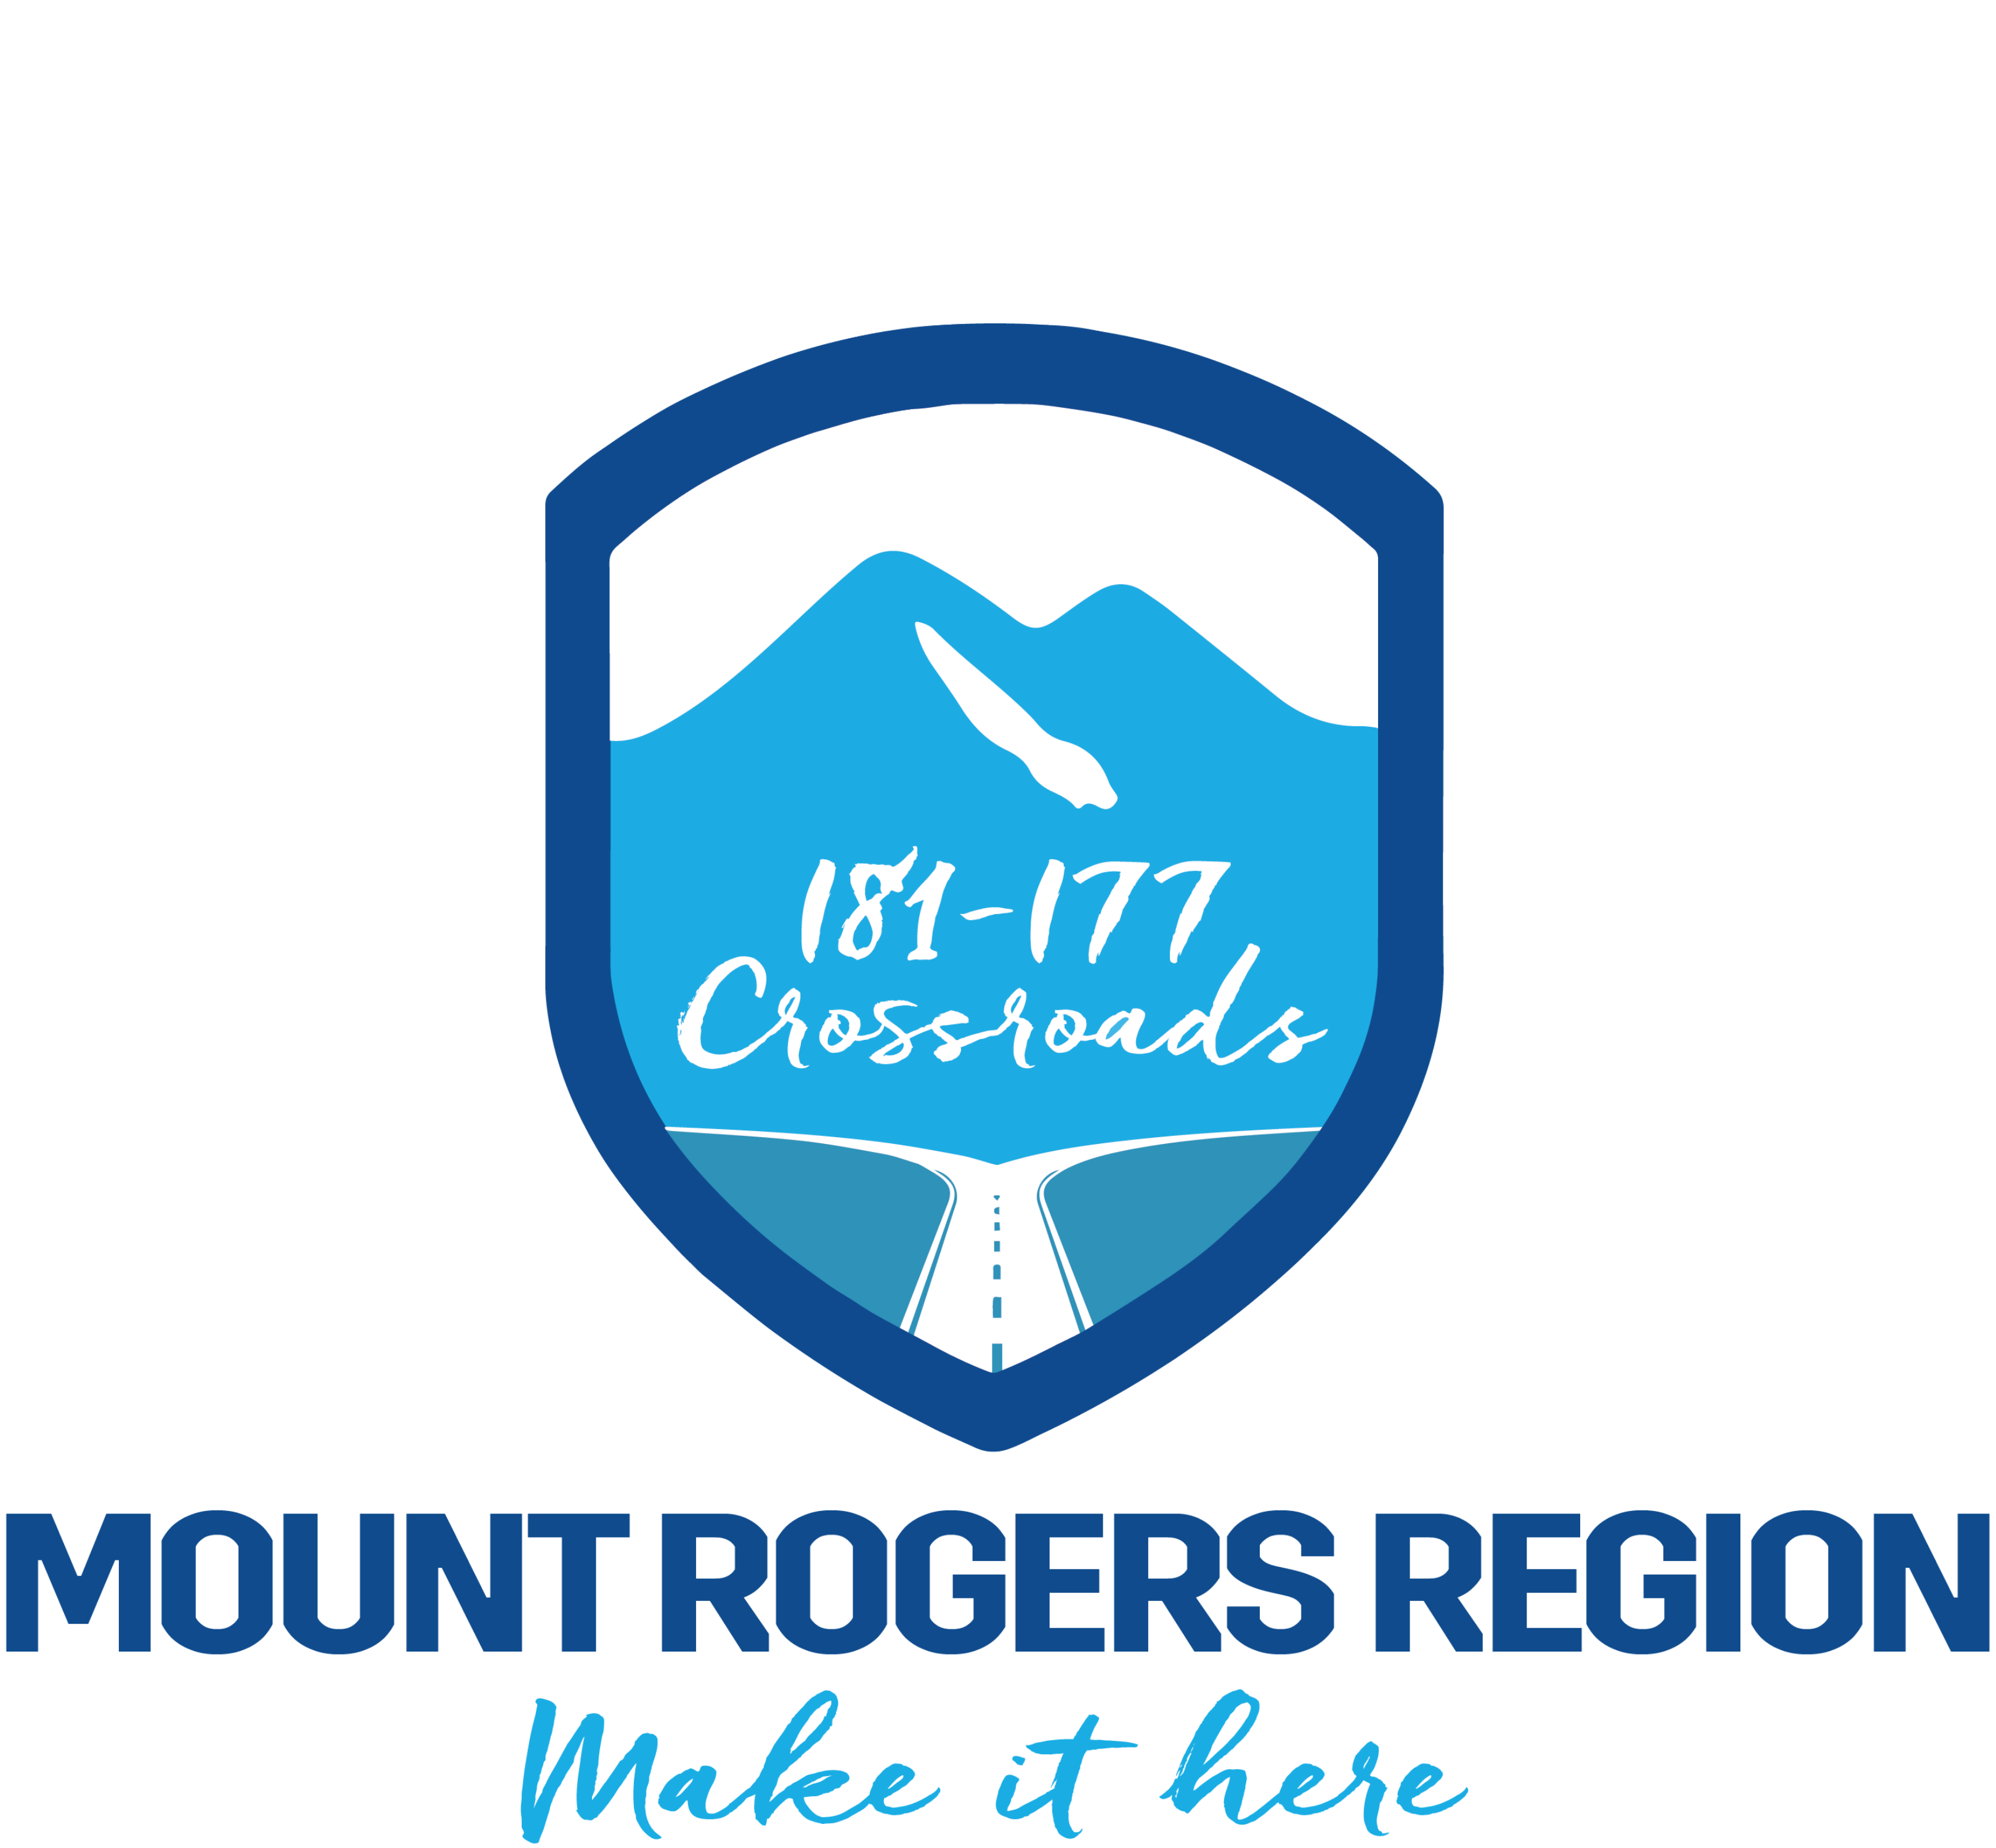 Mount Rogers Regional Partnership